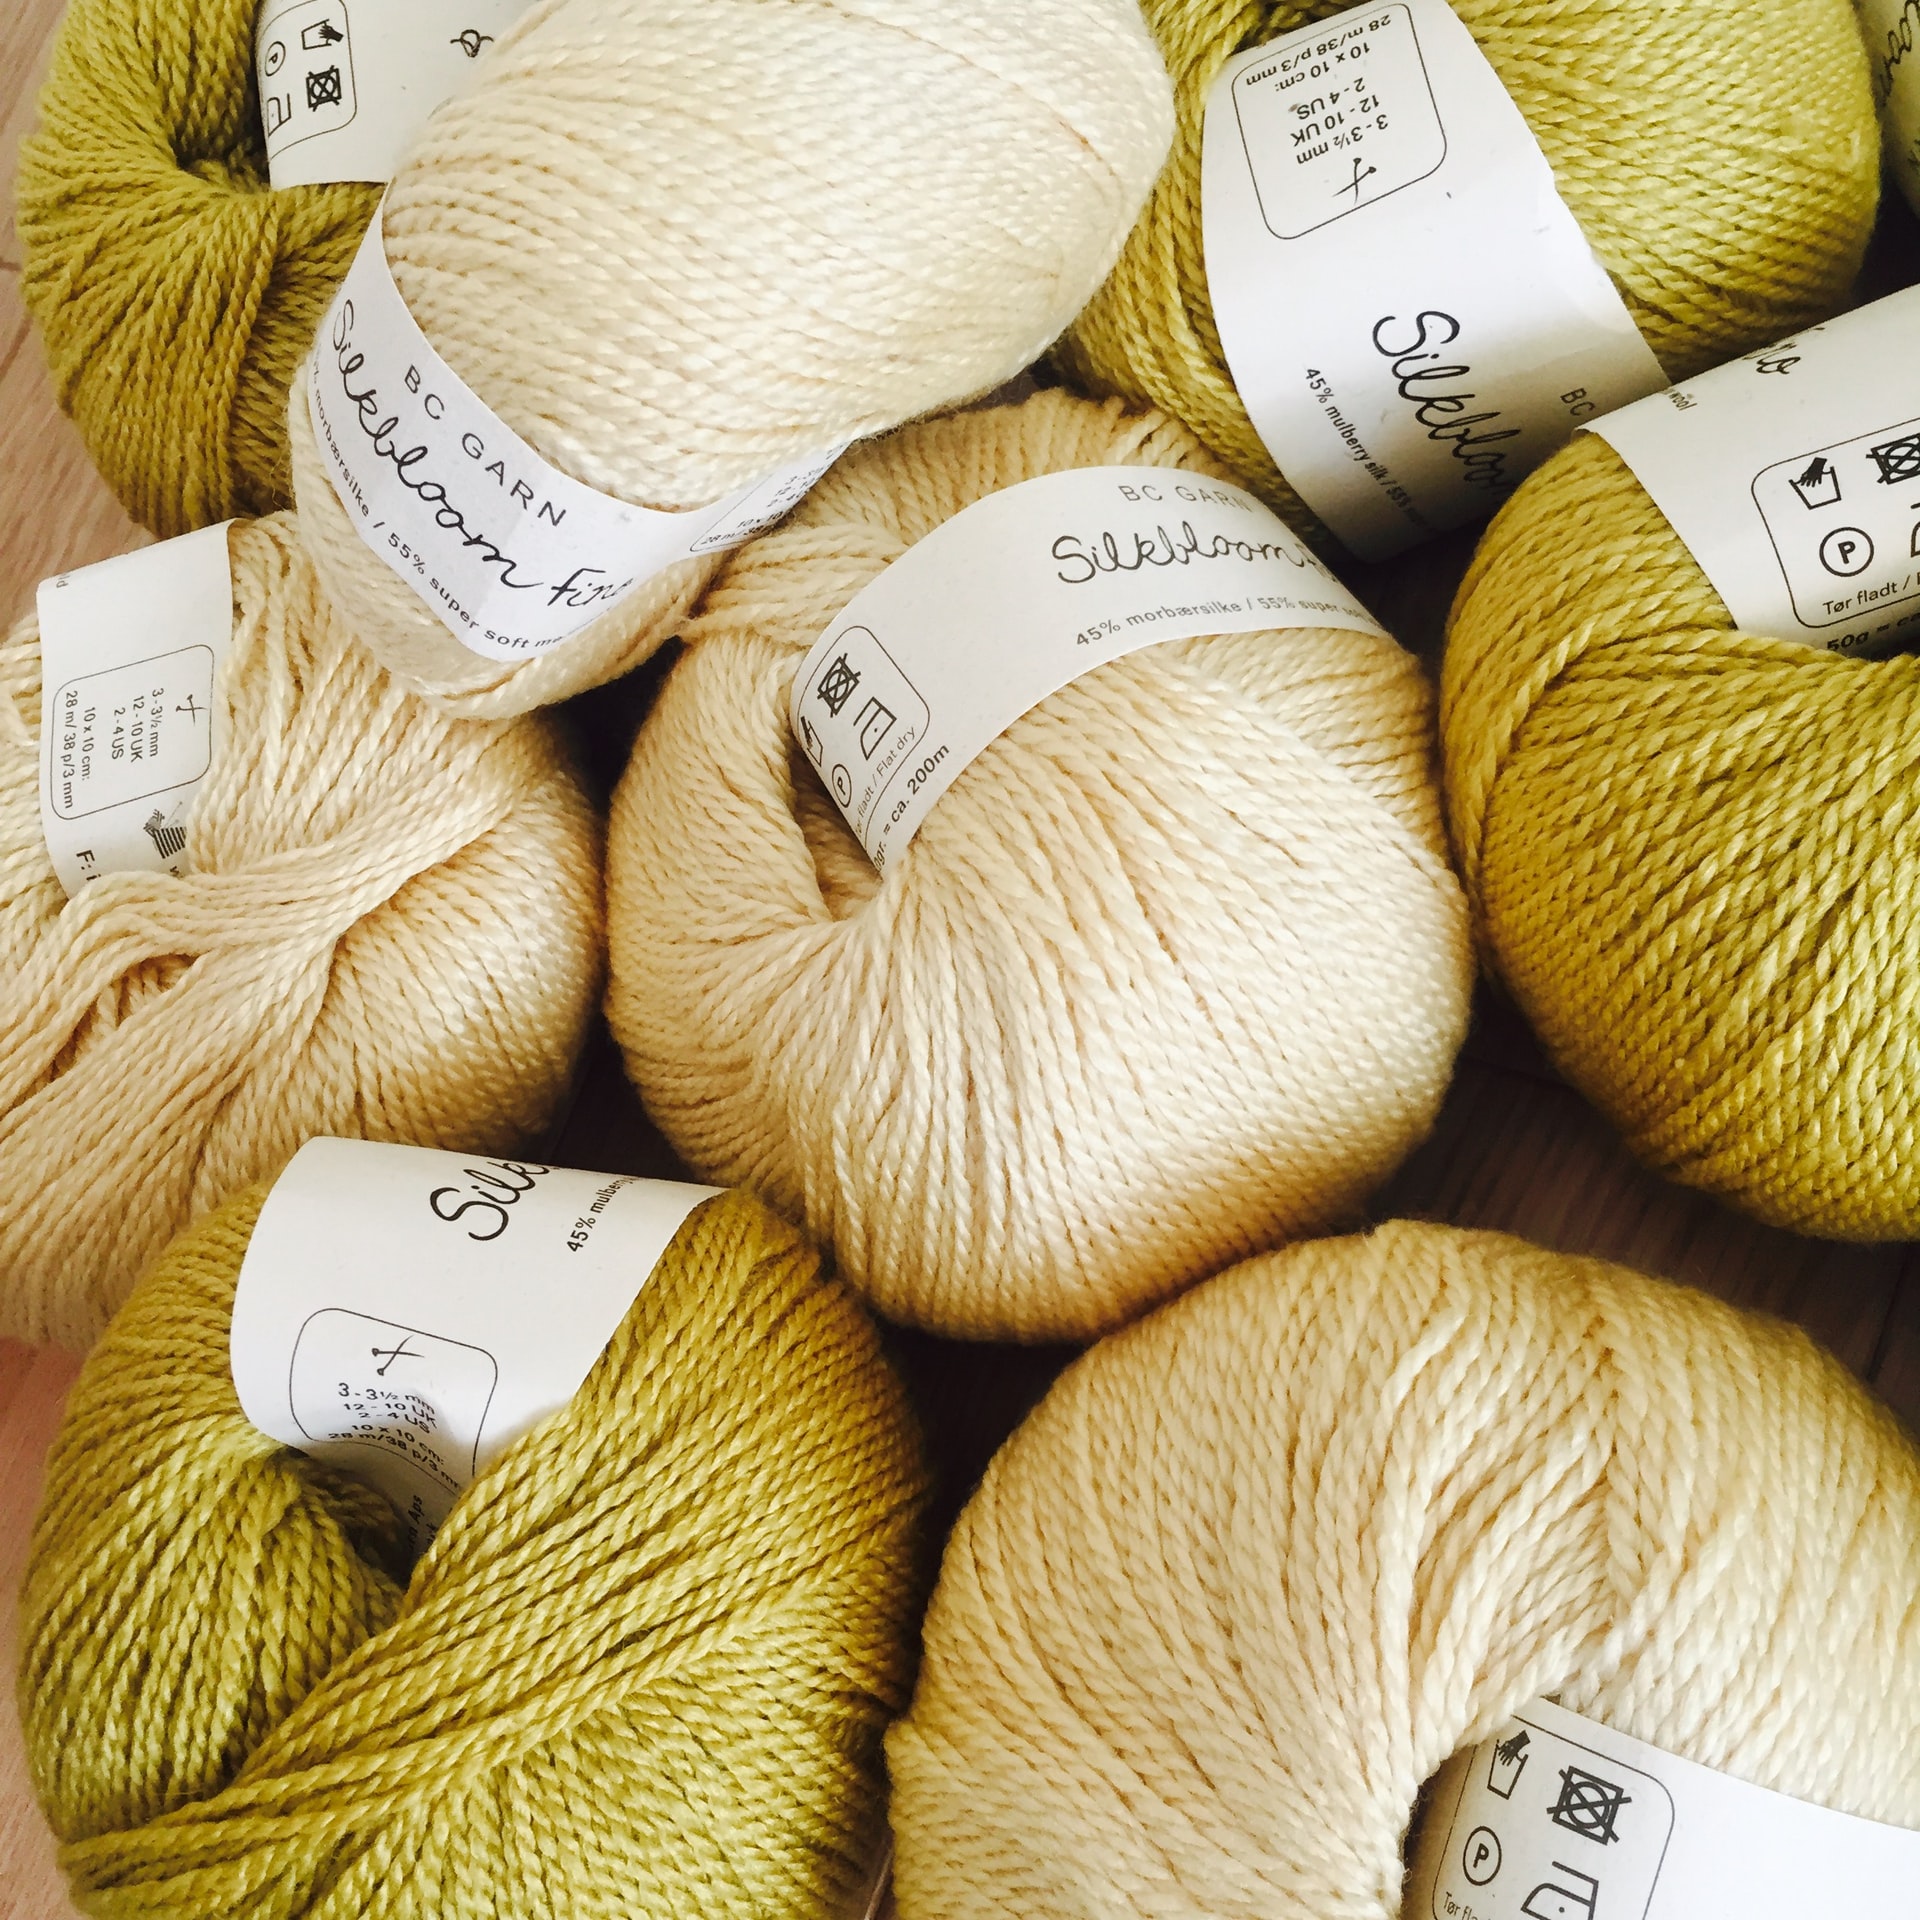 Yarn for big shawl - bulky, cheap, lightweight? - General Knitting - KnittingHelp Forum Community